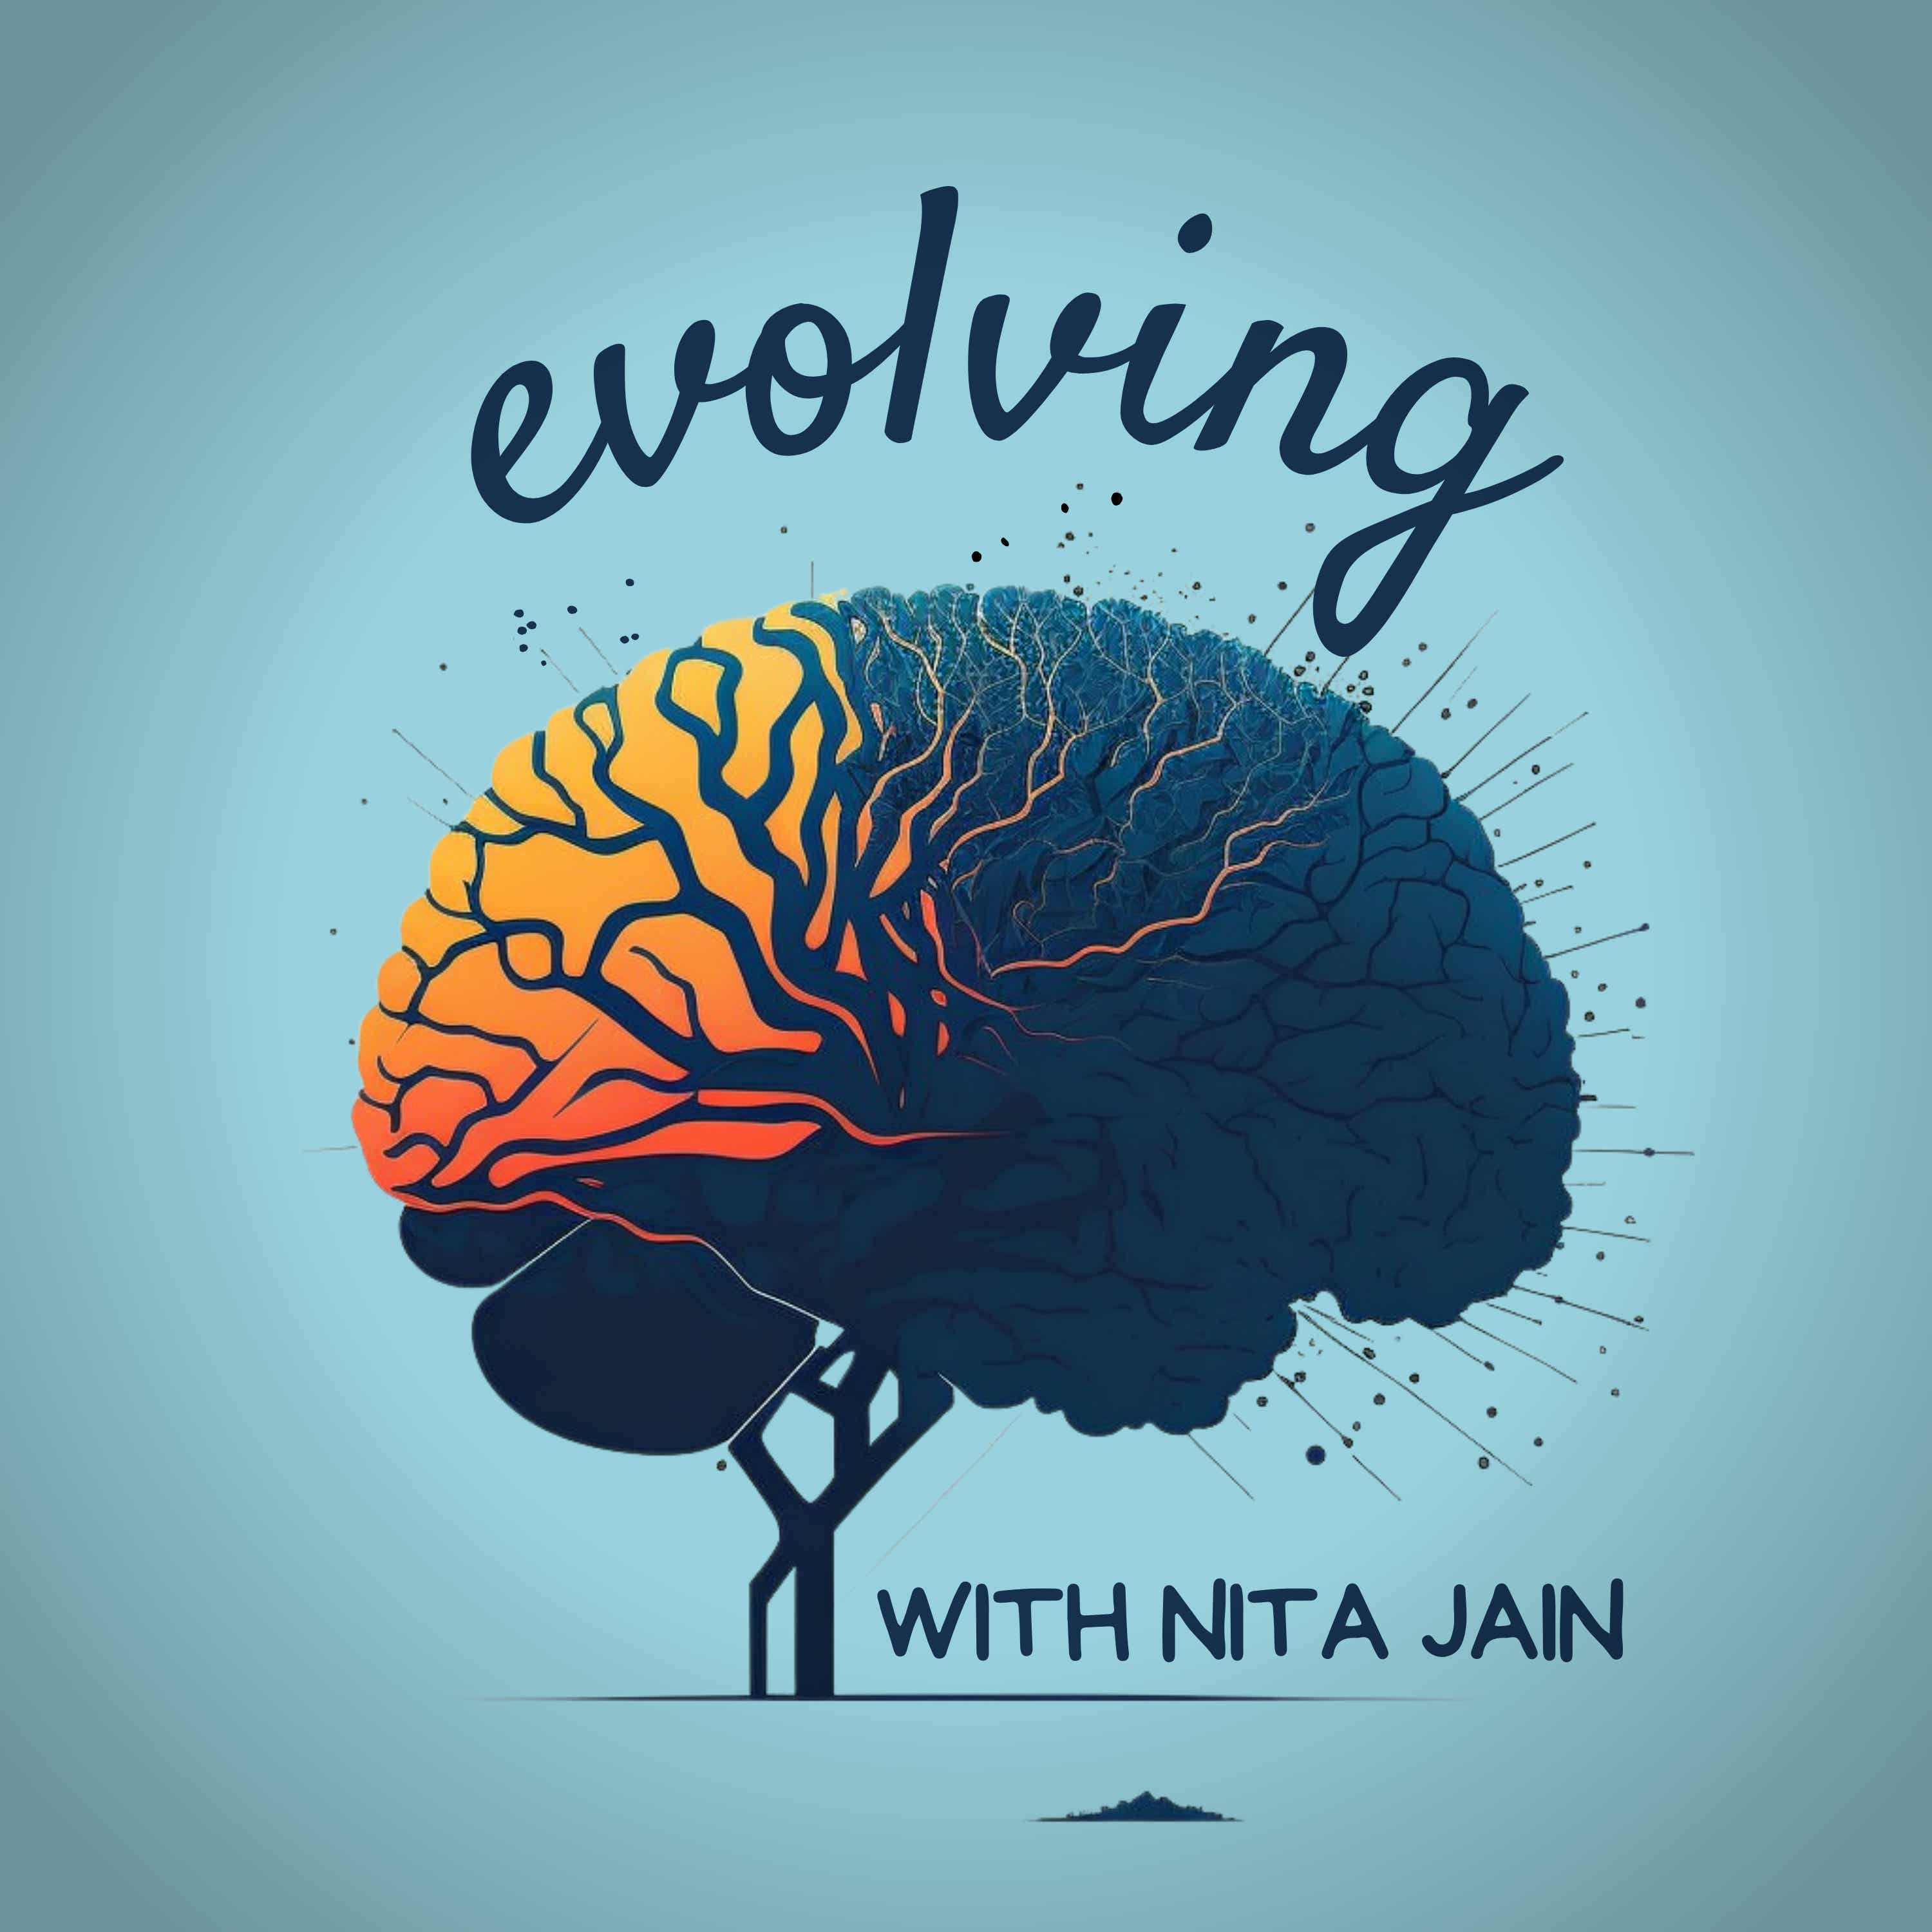 Evolving with Nita Jain: Health | Science | Self-Development